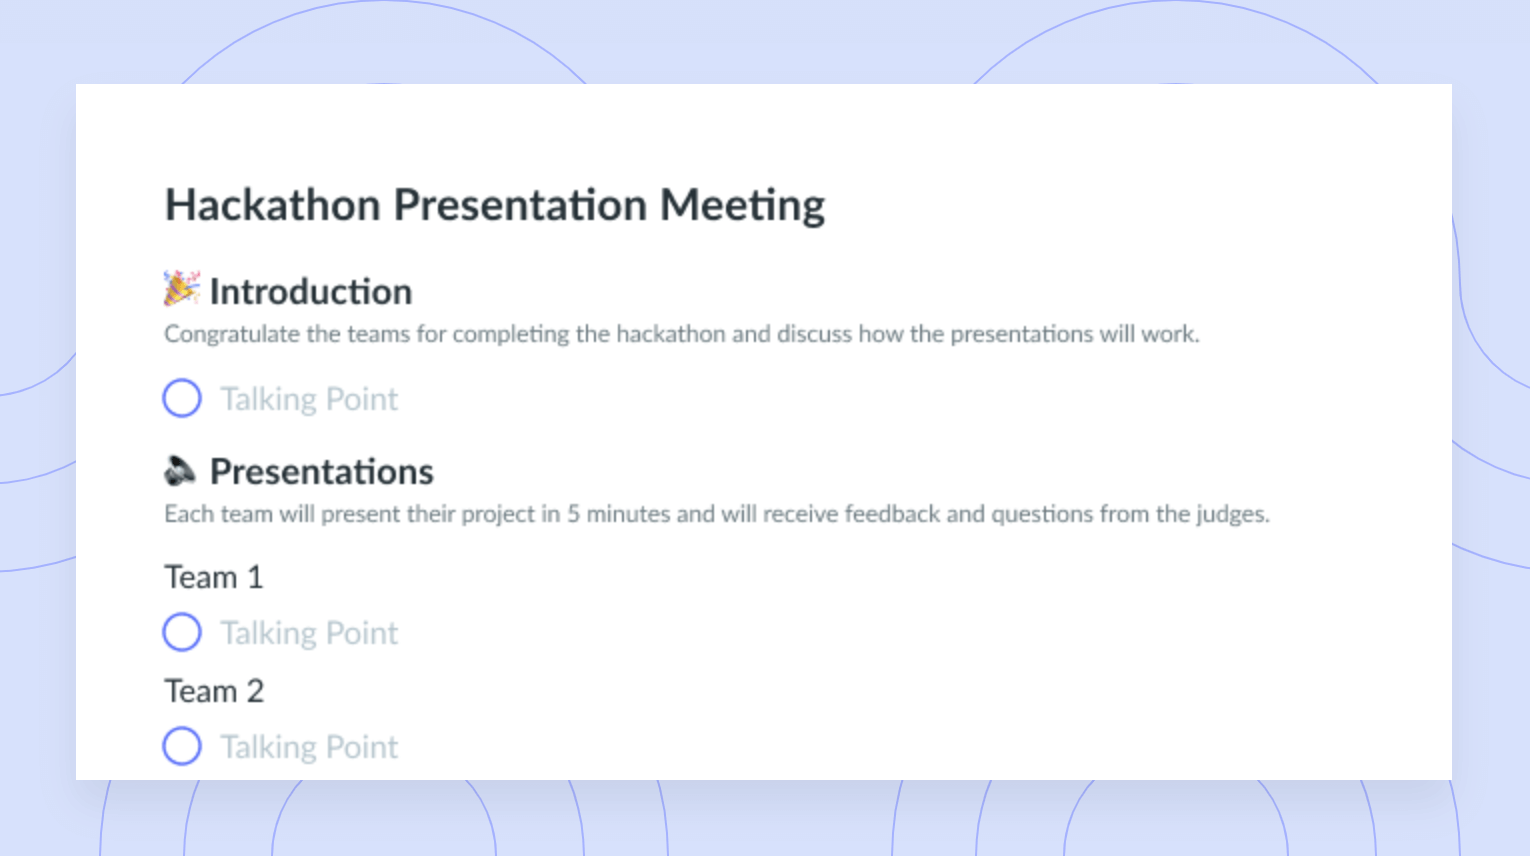 Hackathon Presentation Meeting Agenda